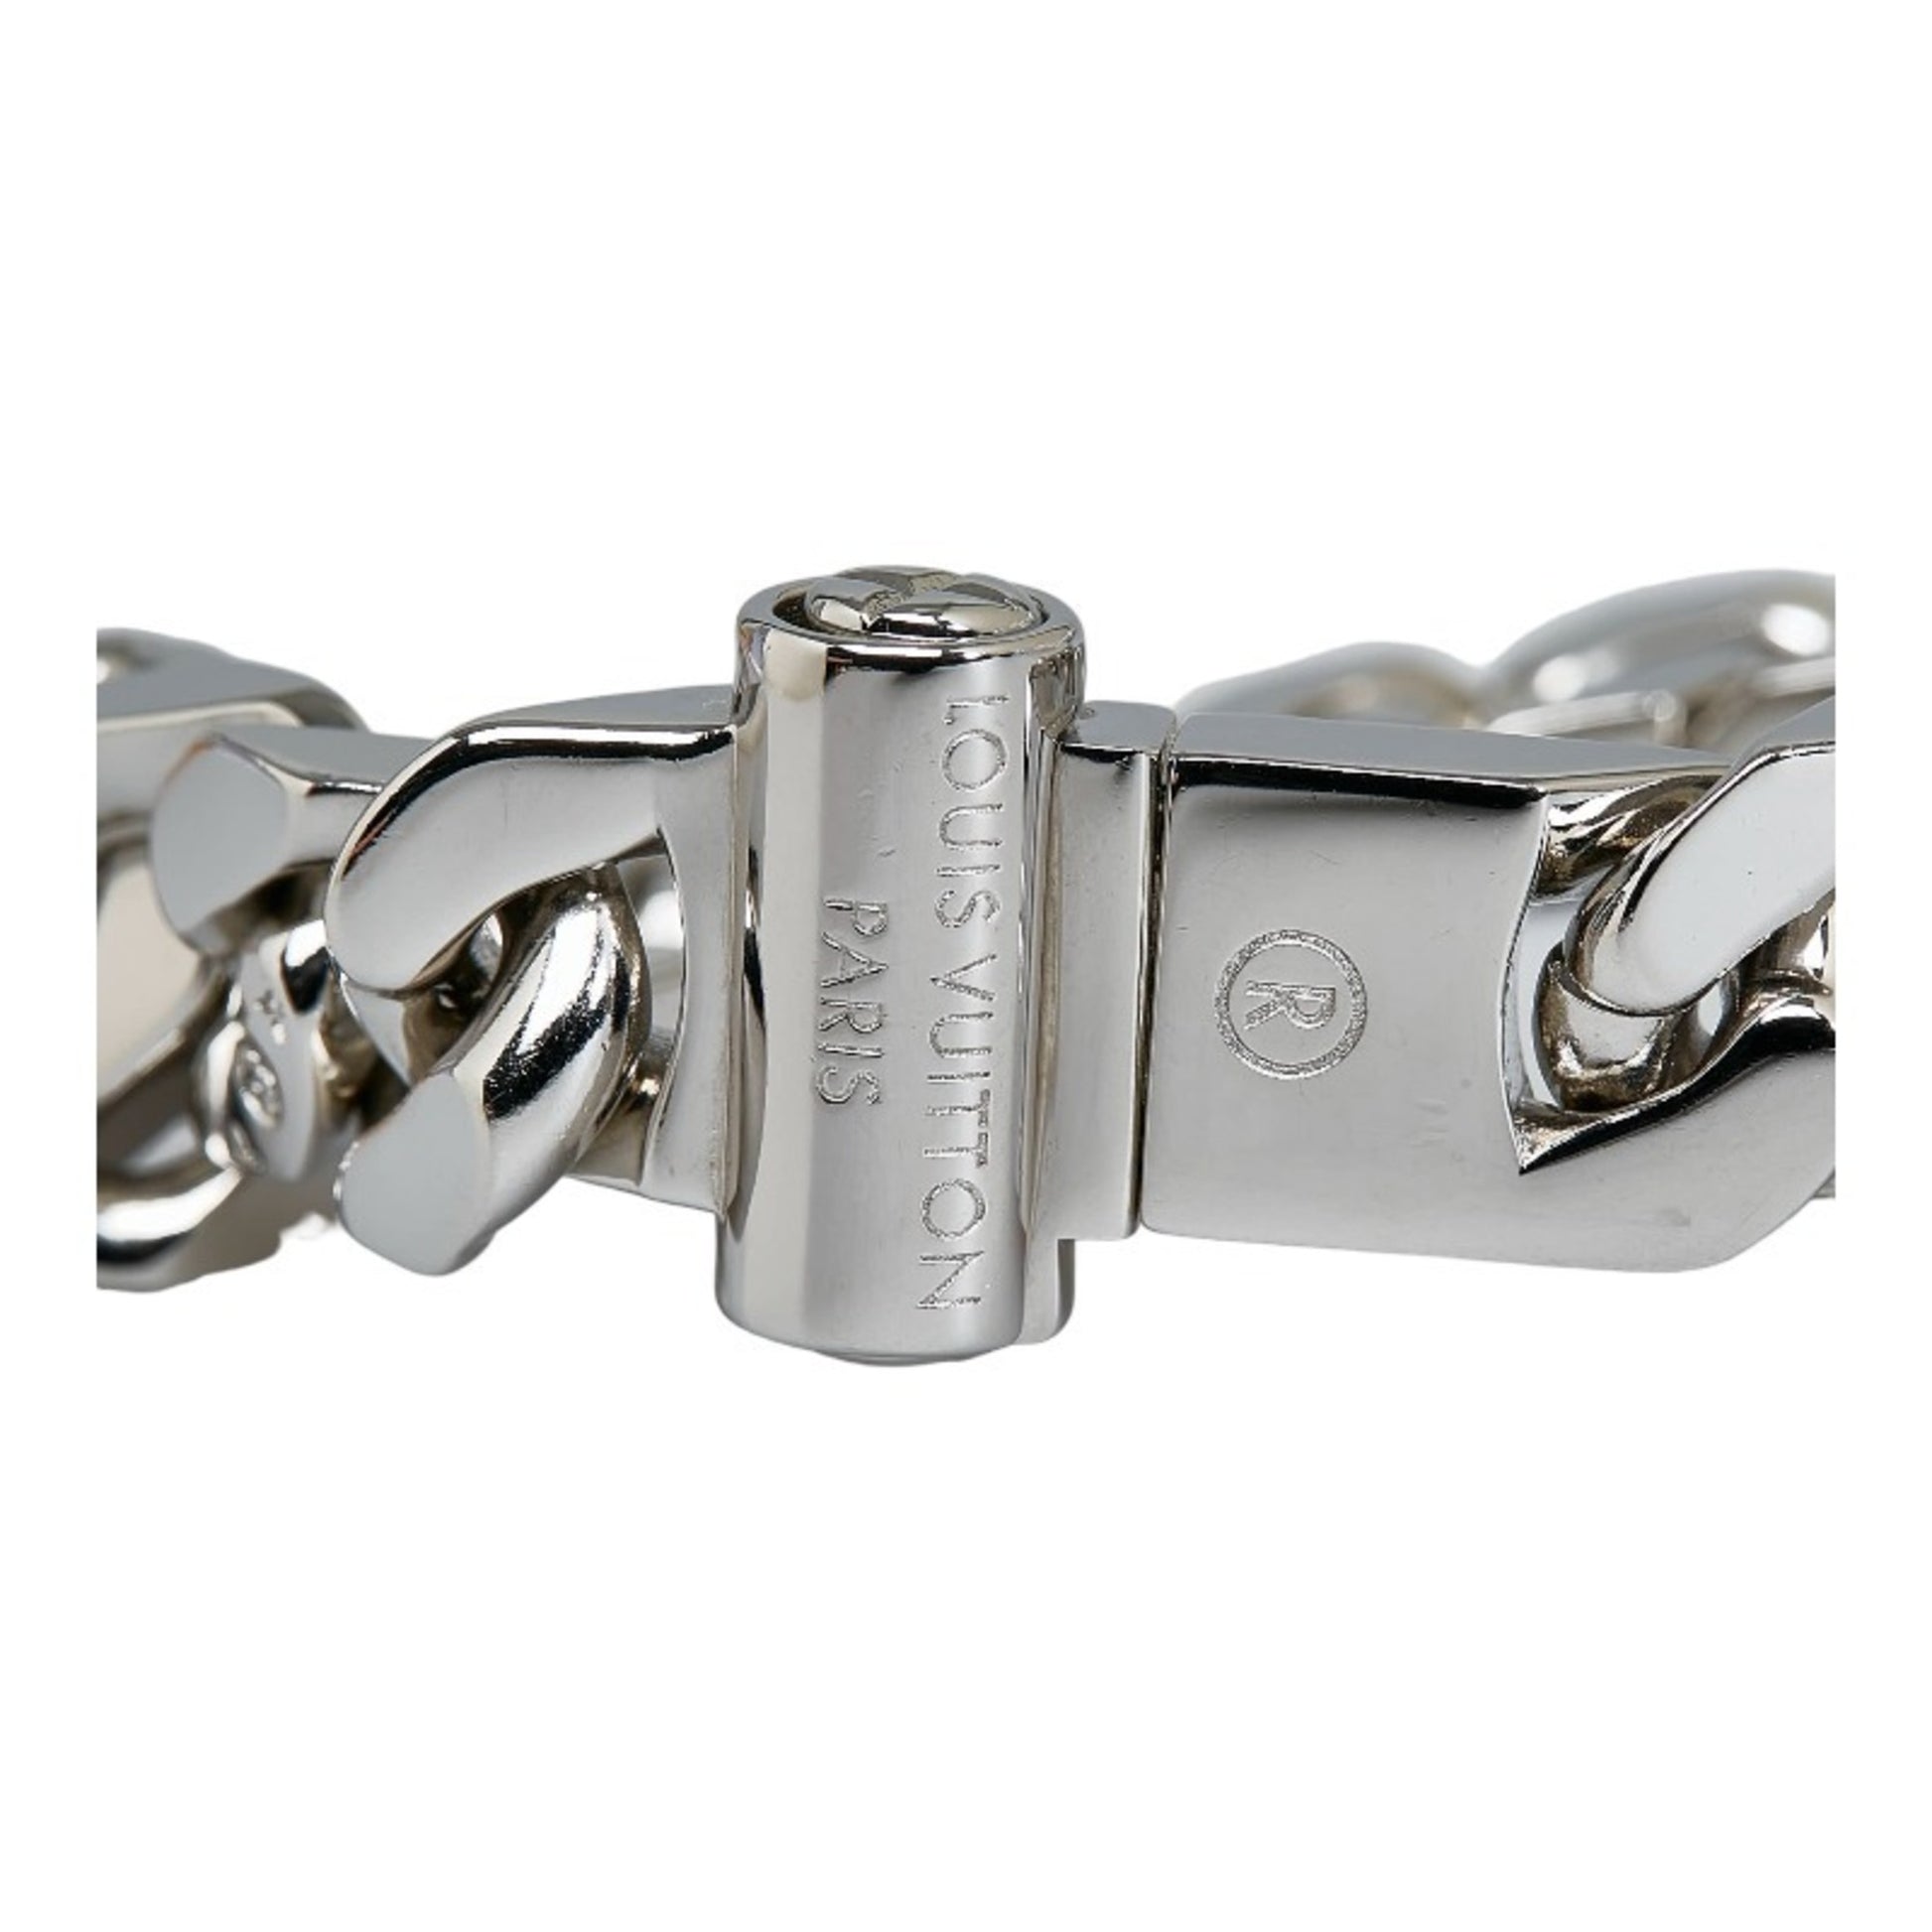 Shop Louis Vuitton MONOGRAM Lv chain links bracelet (M69989, M69988) by  babybbb